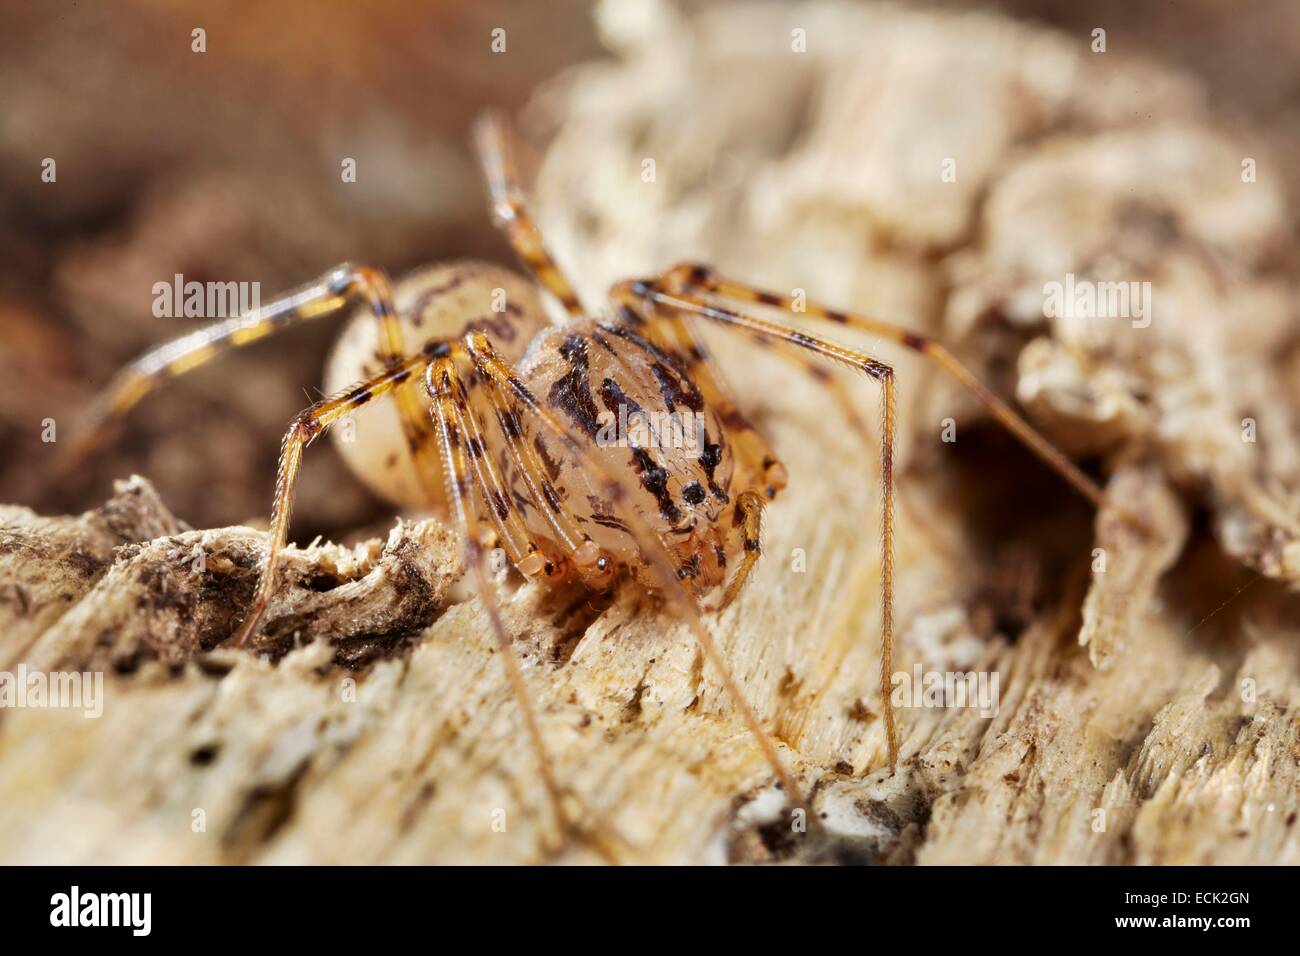 France, Paris, Araneae, Scytodidae, Spitting Spider (Scytodes thoracica) Stock Photo